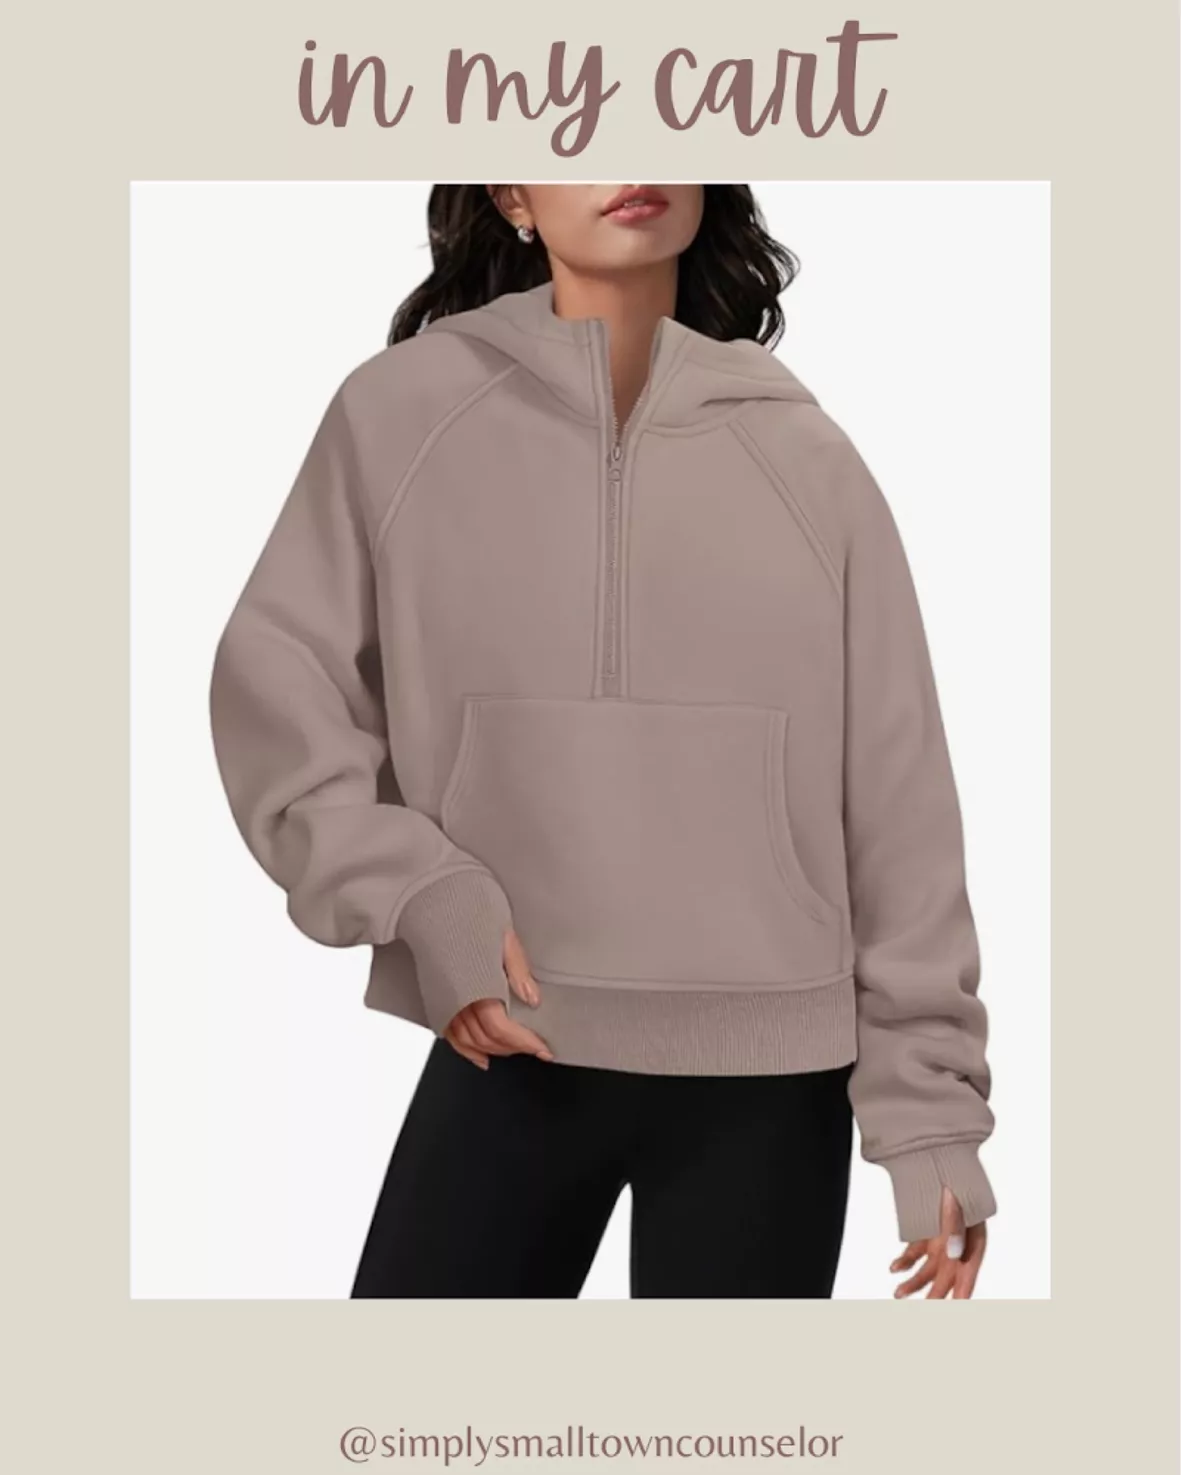 ATHMILE Womens Sweatshirts Half … curated on LTK